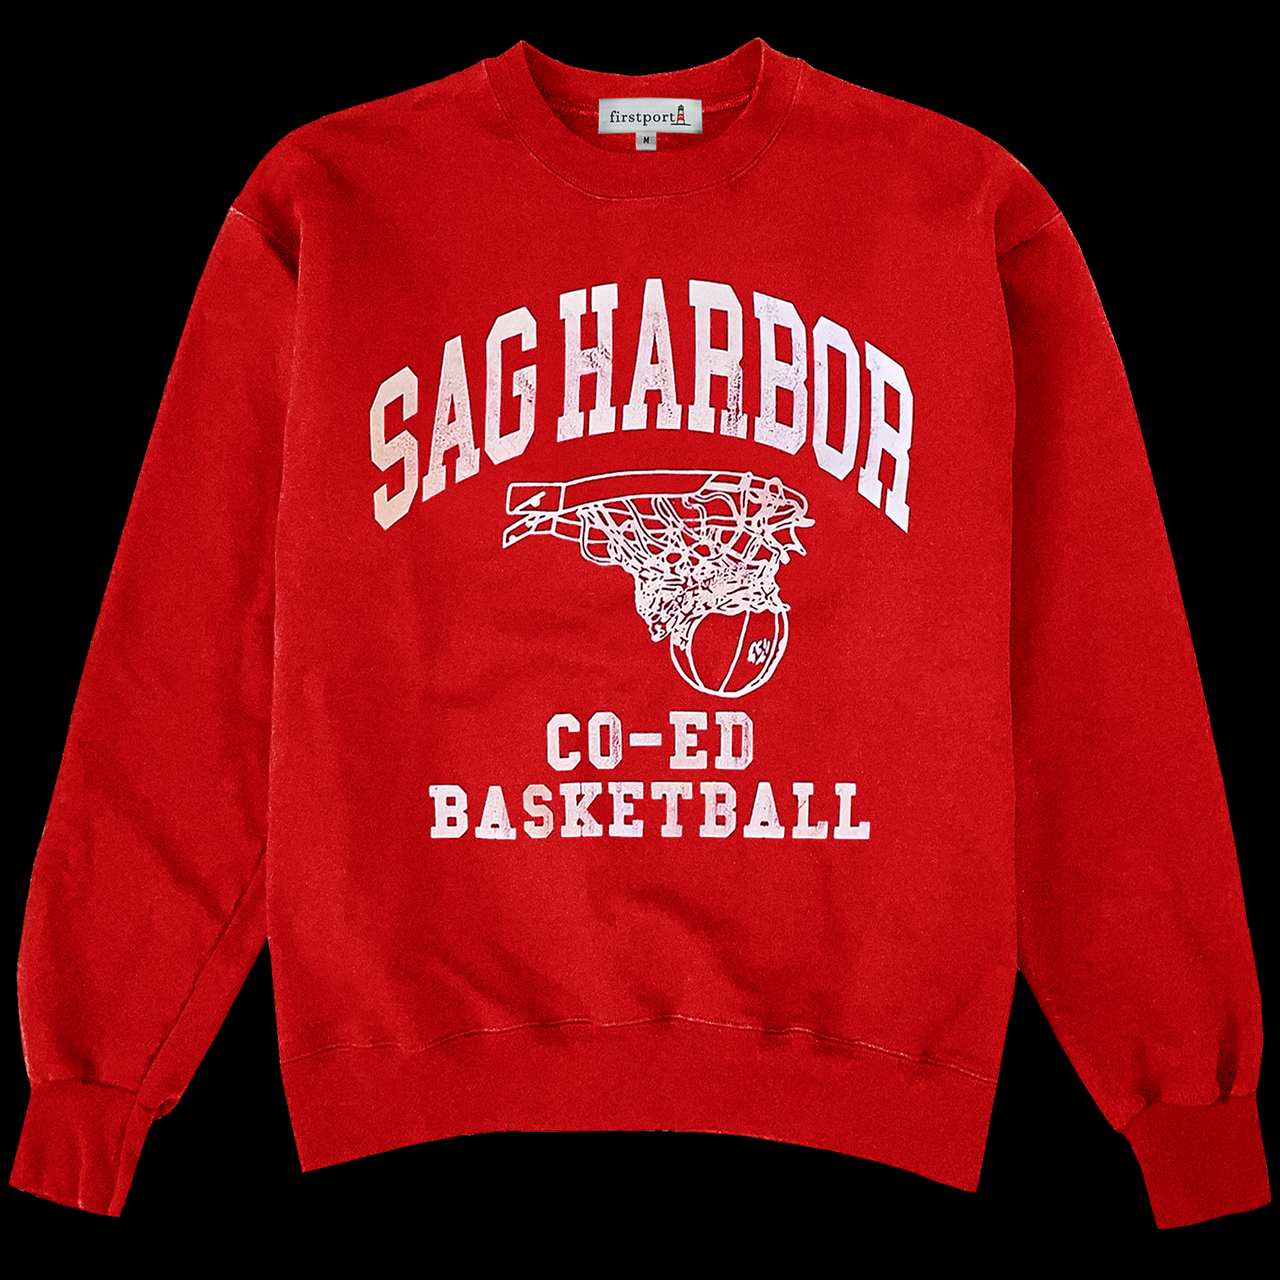 Sagharbor Co Ed Basketball Sweatshirt 2 1